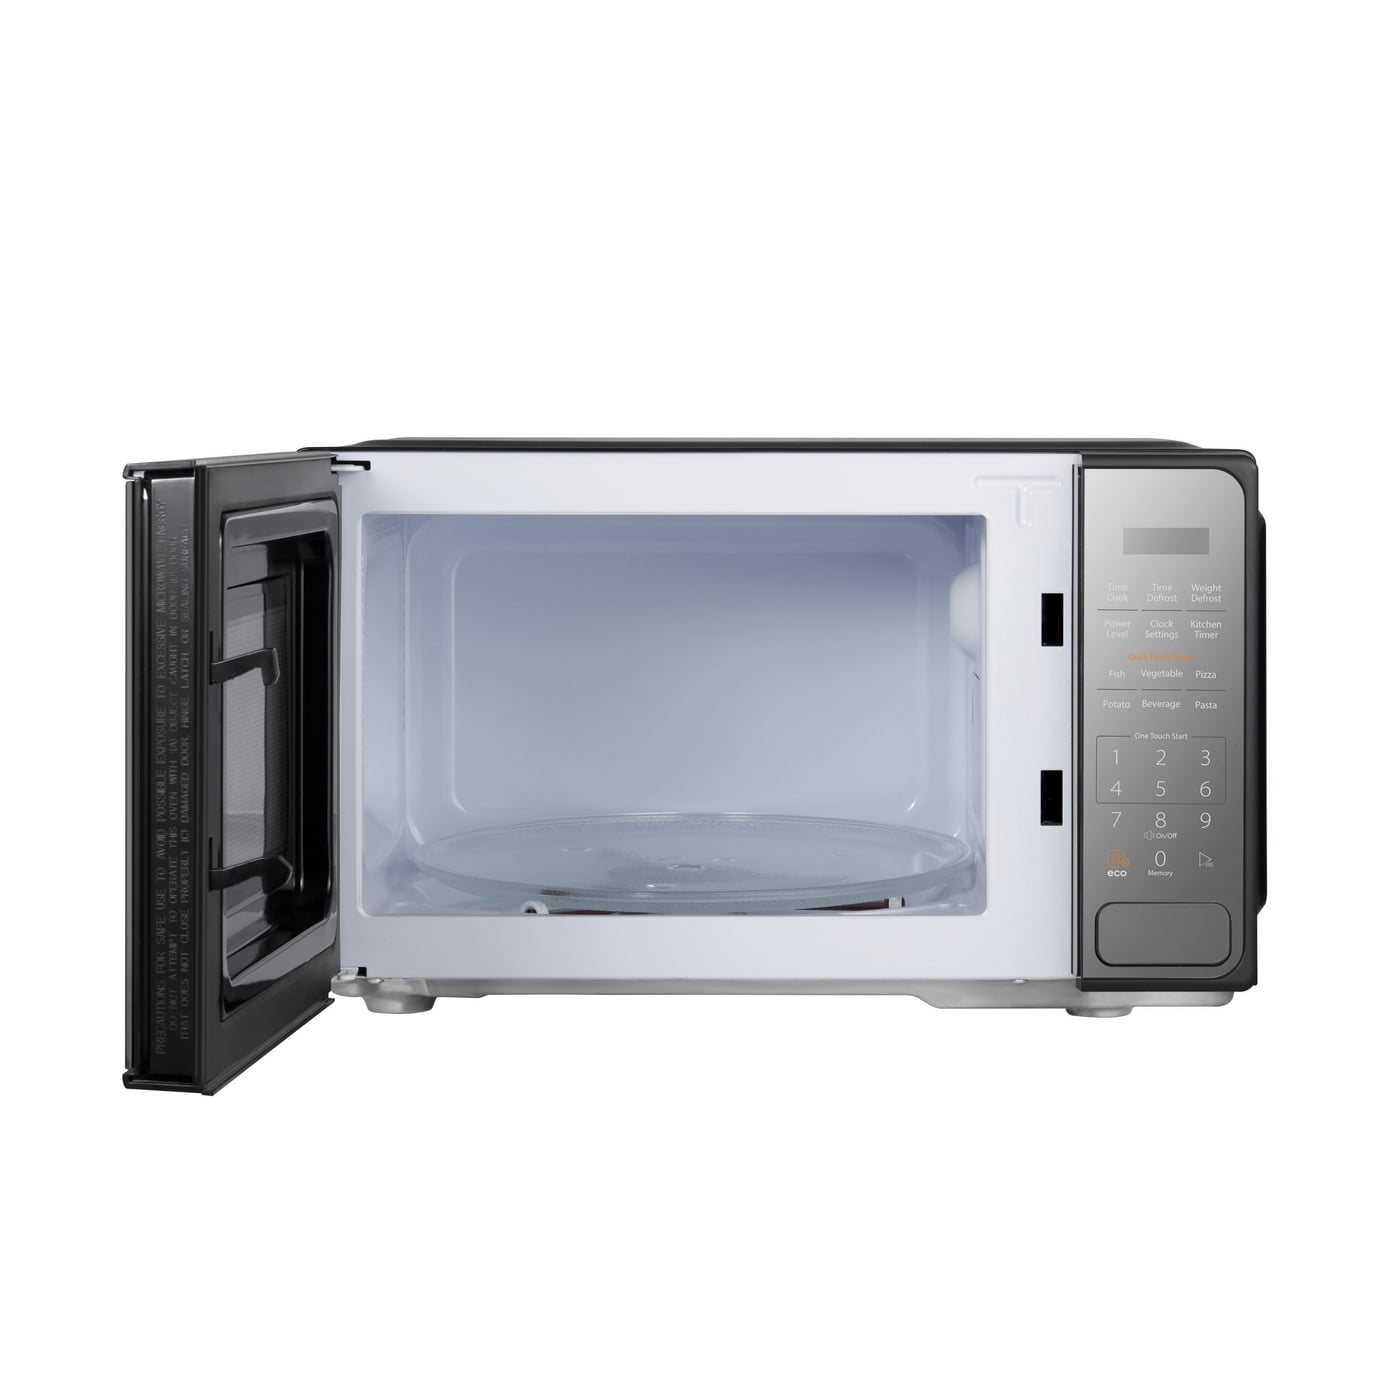 Toshiba MM2-EM20PF 20 Litres Microwave Oven - Mirror Finish Black